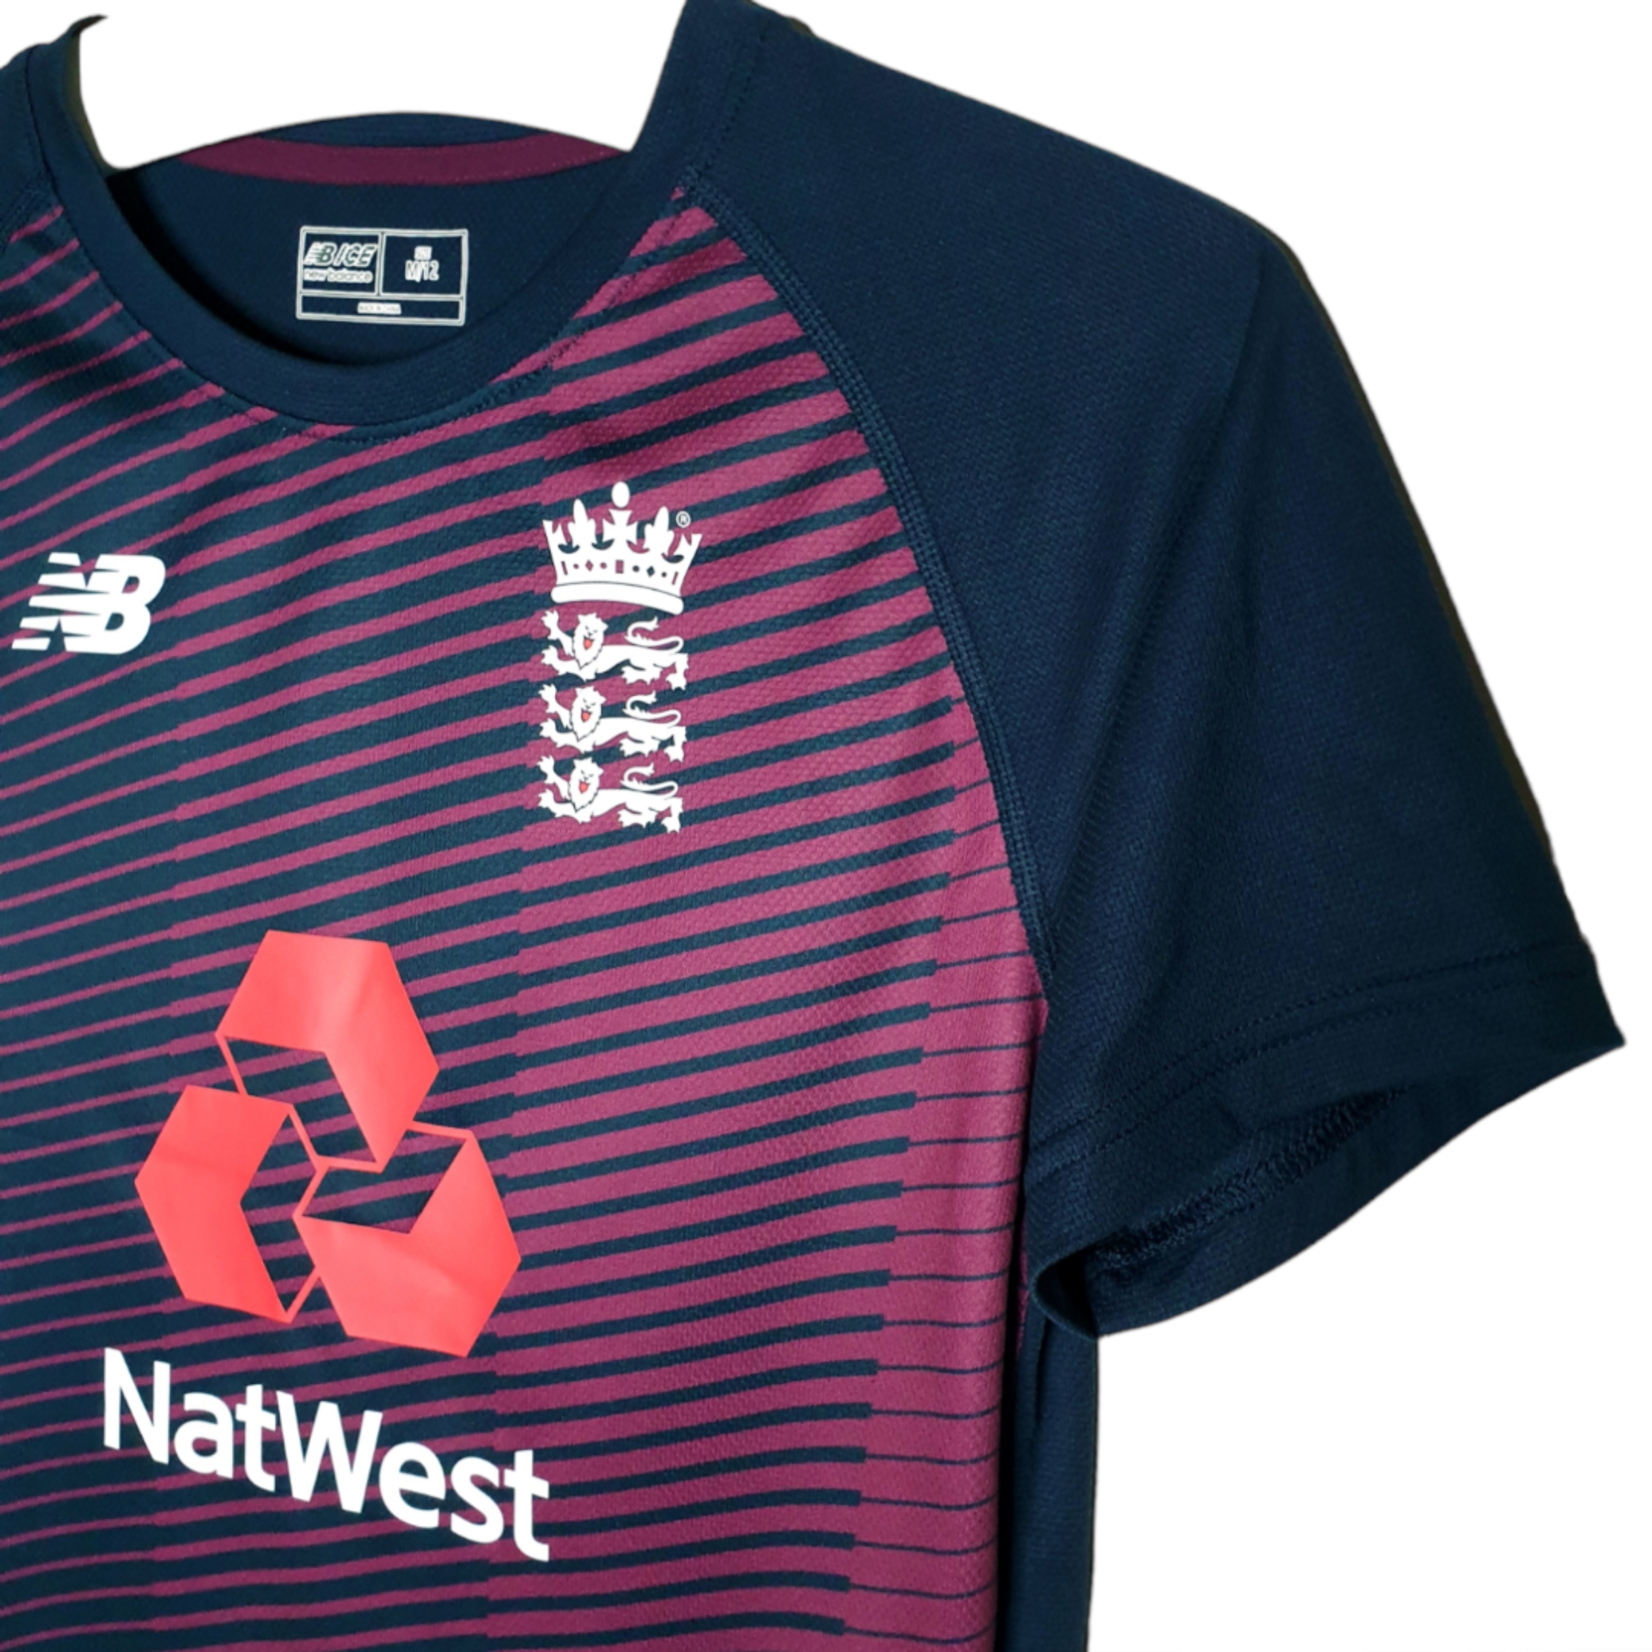 New Balance Origineel New Balance vintage cricket training shirt Engeland 2019